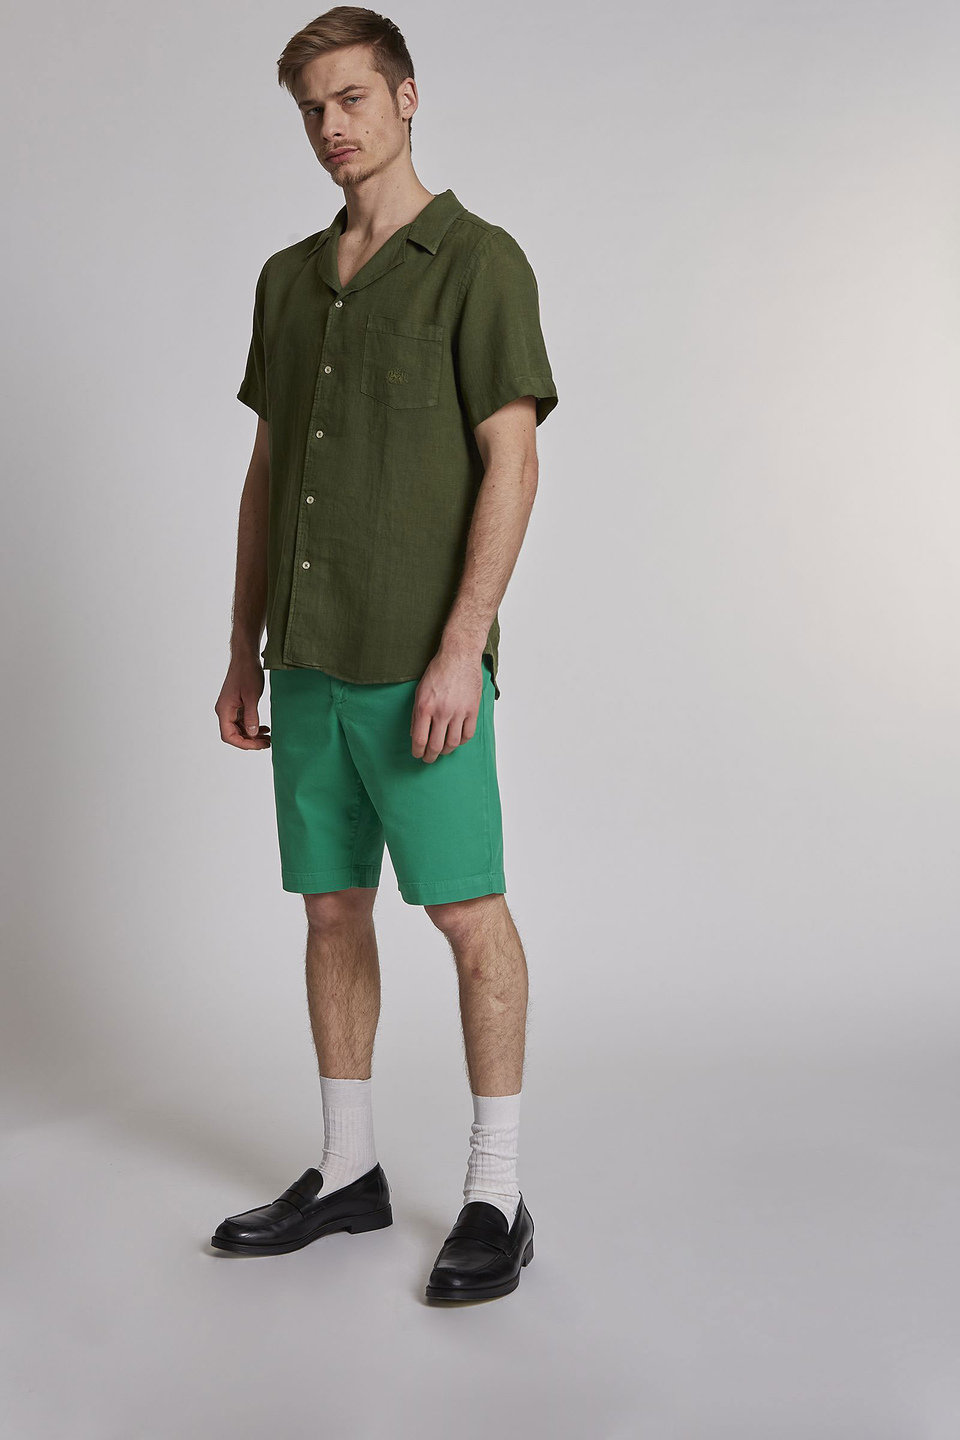 Men's short-sleeved regular-fit linen shirt | La Martina - Official Online Shop